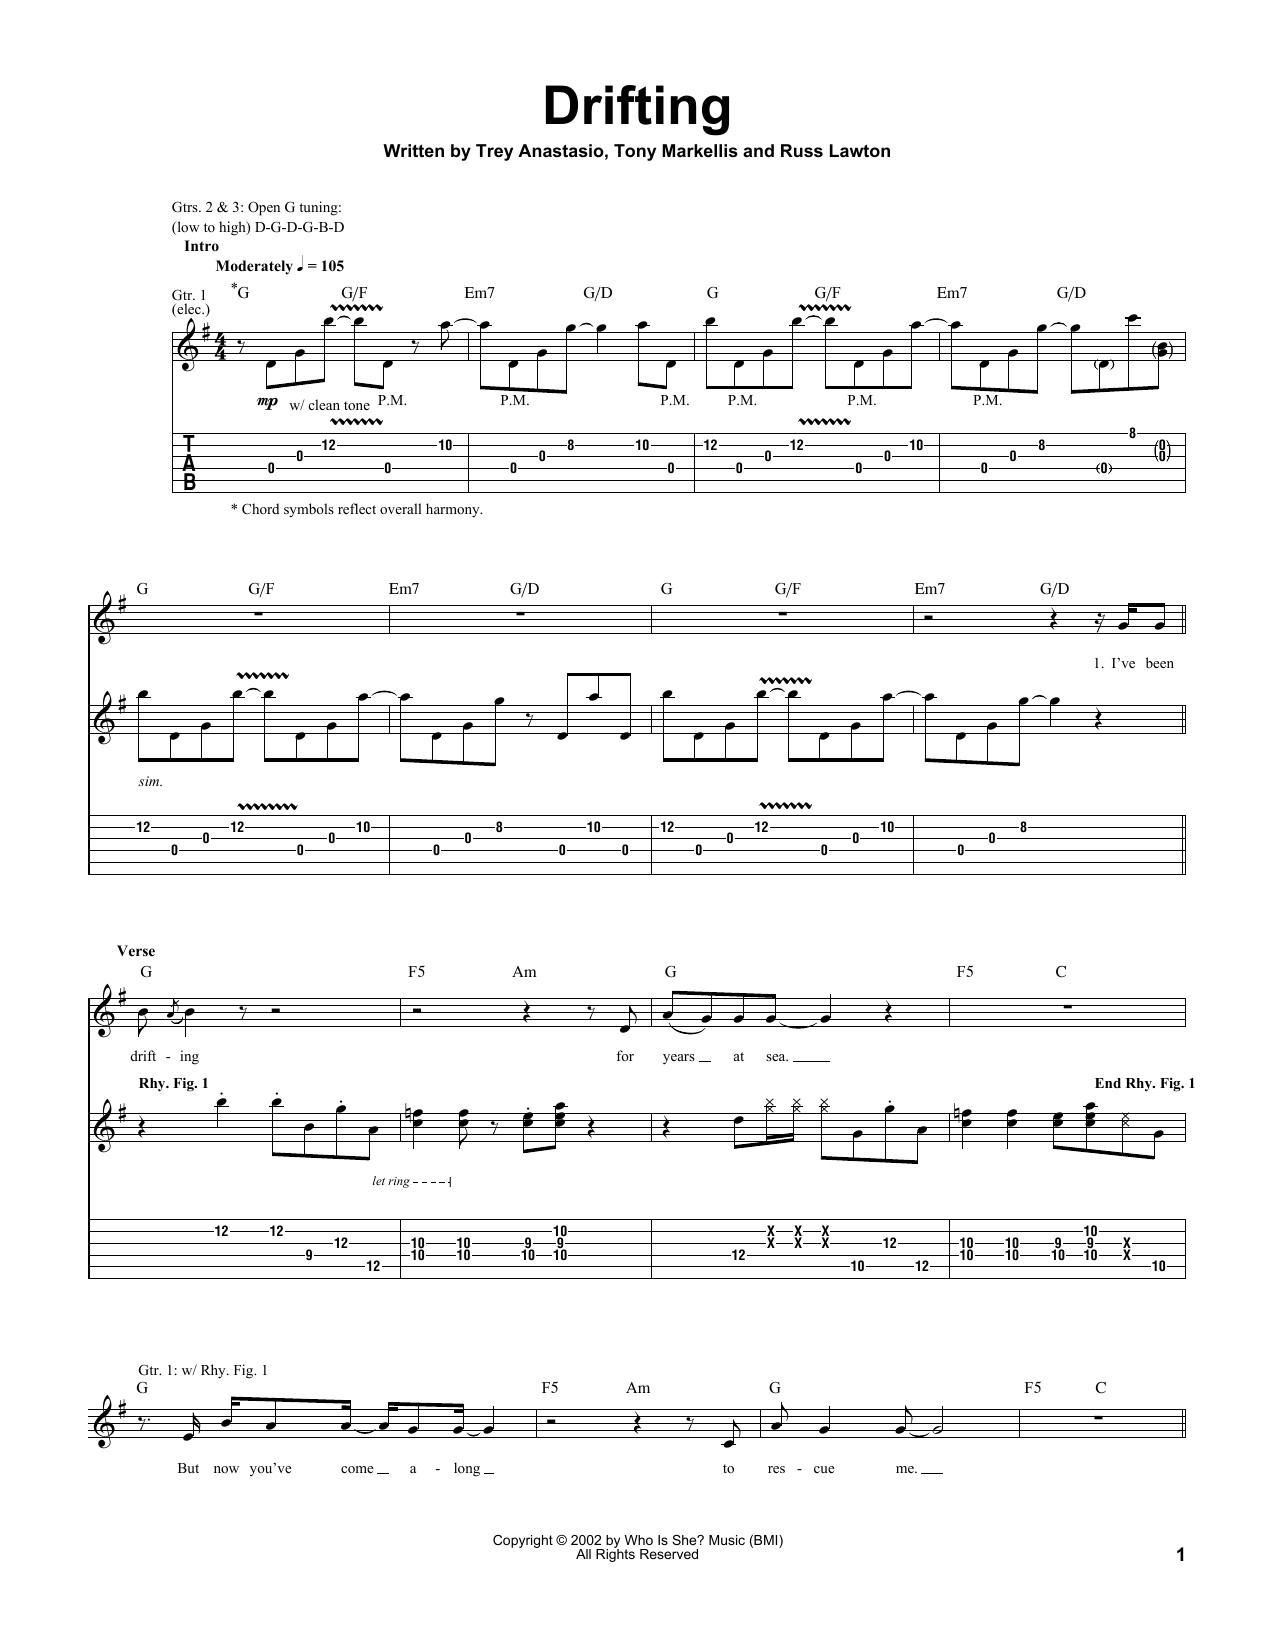 Trey Anastasio Drifting Sheet Music Notes & Chords for Guitar Tab - Download or Print PDF